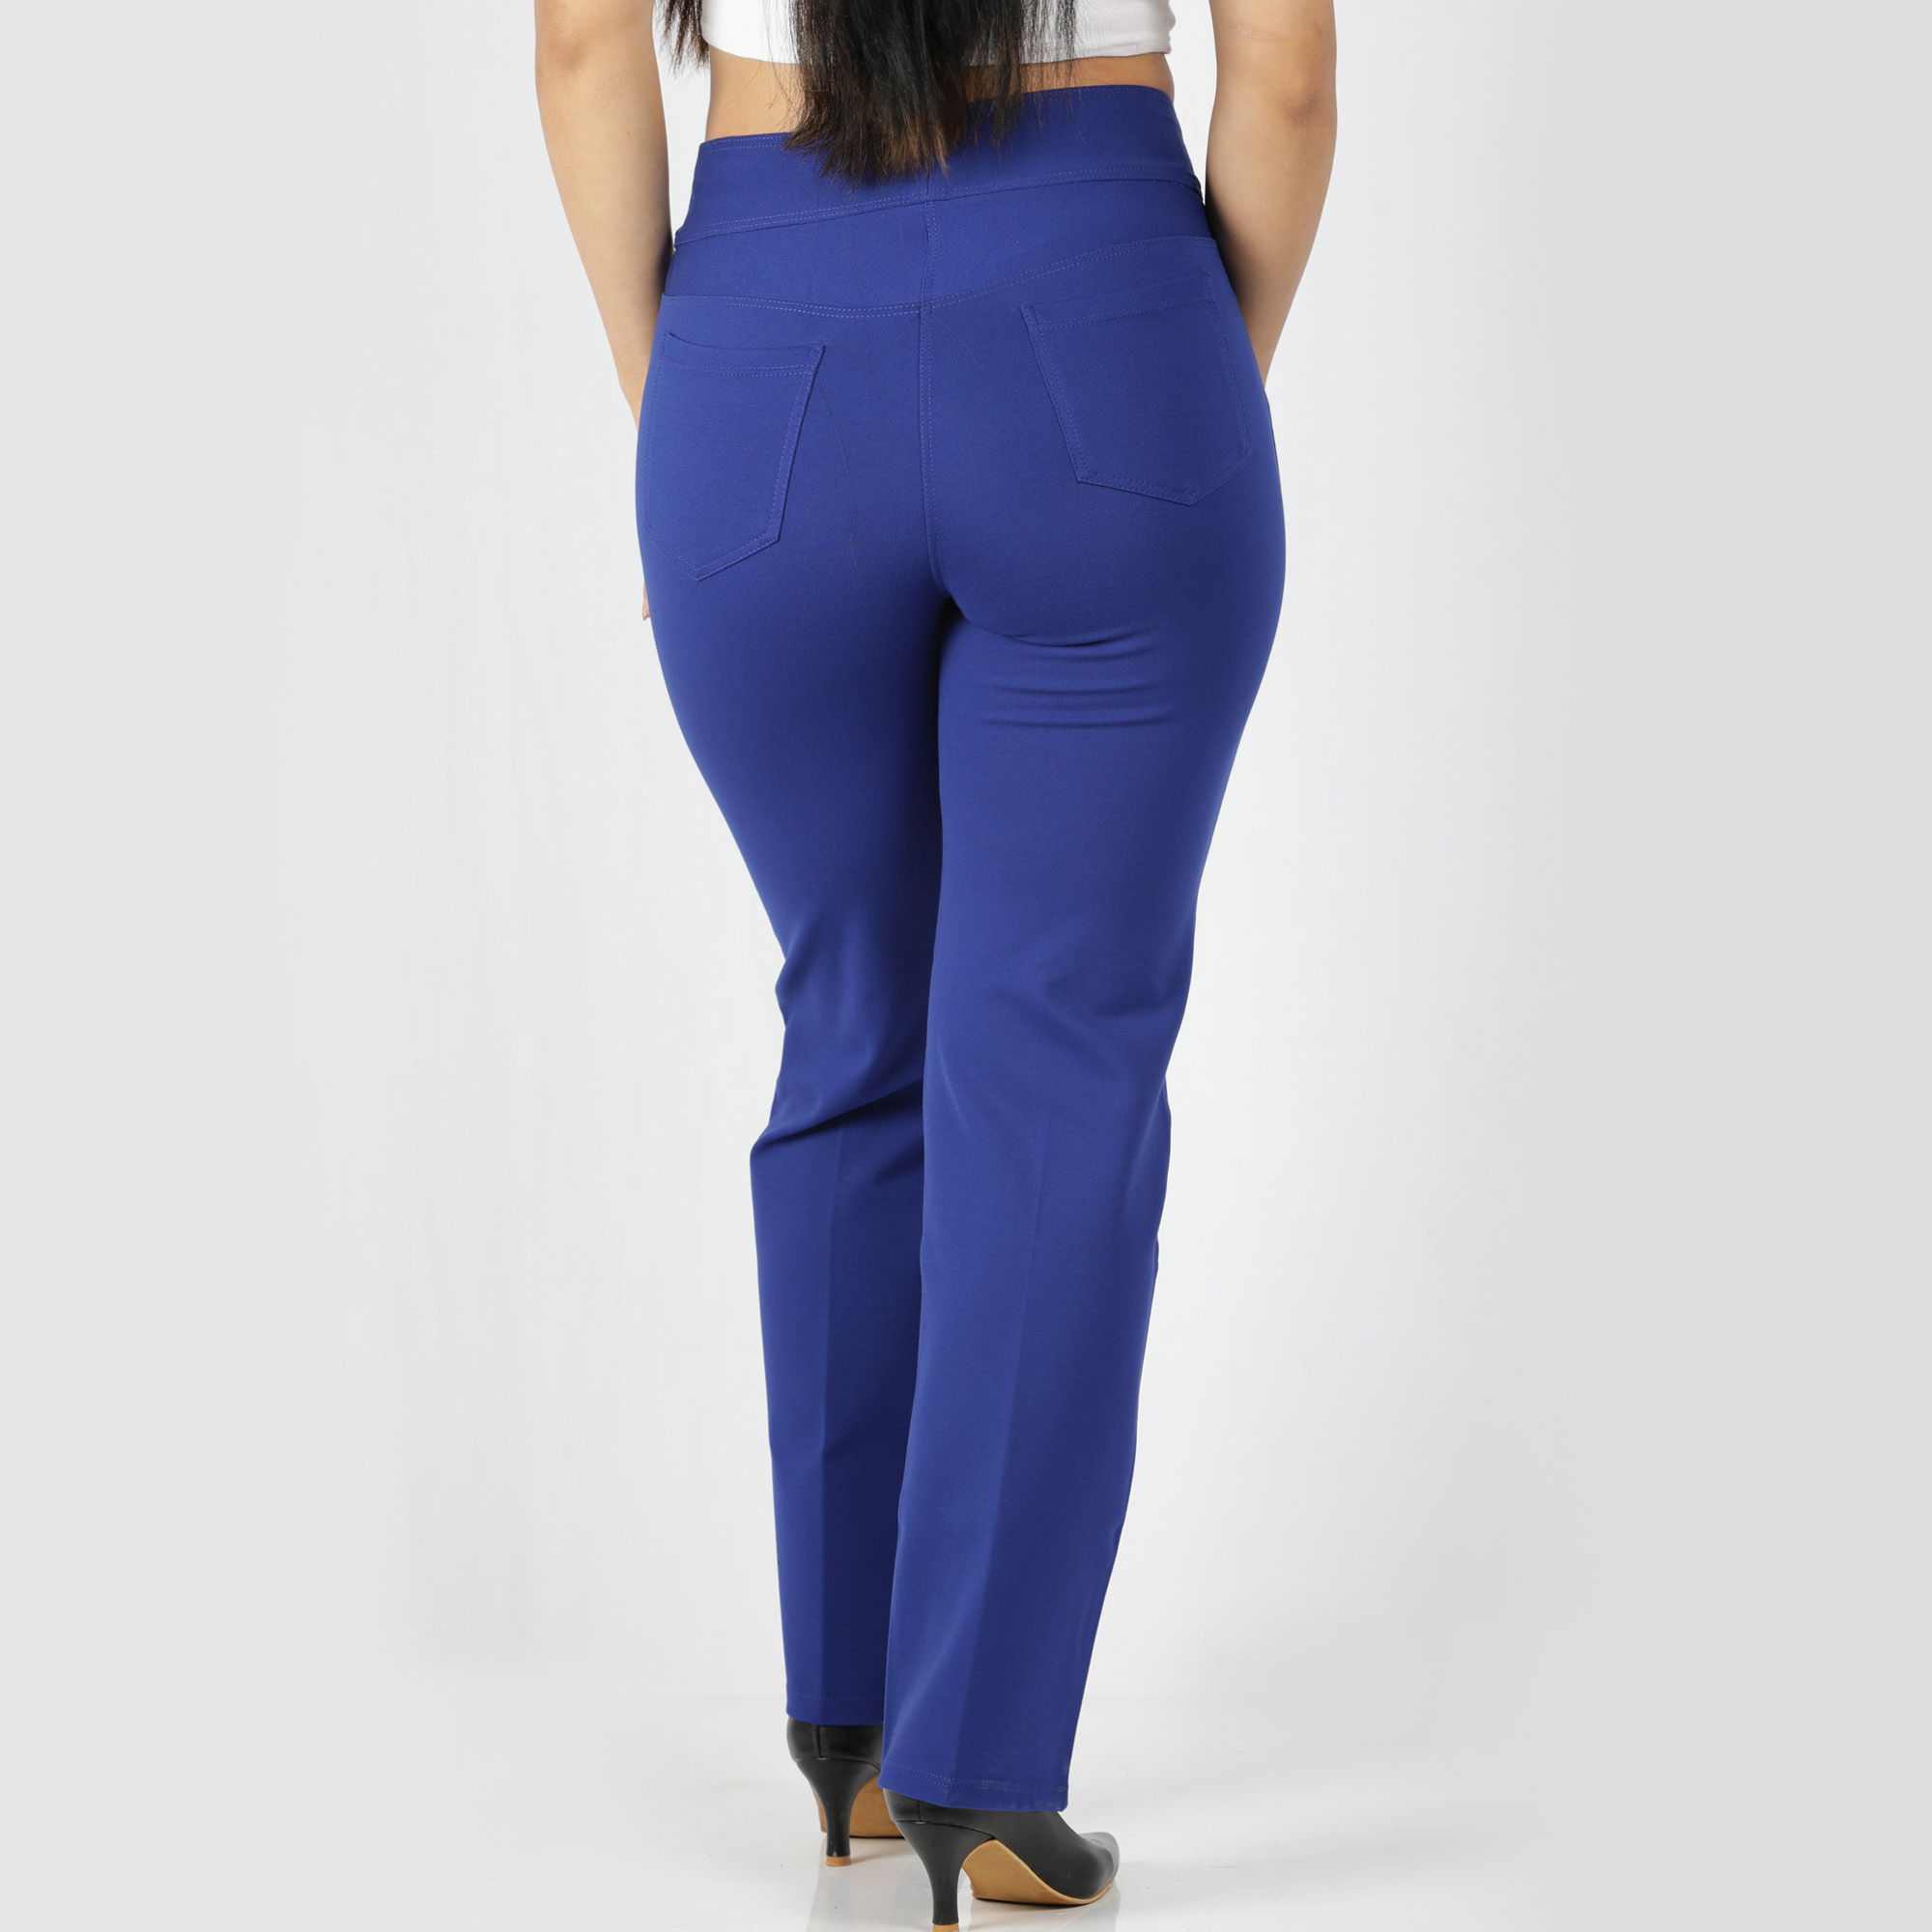 Royal blue pants women's - Tummy tucker straight leg-2 bk pockets